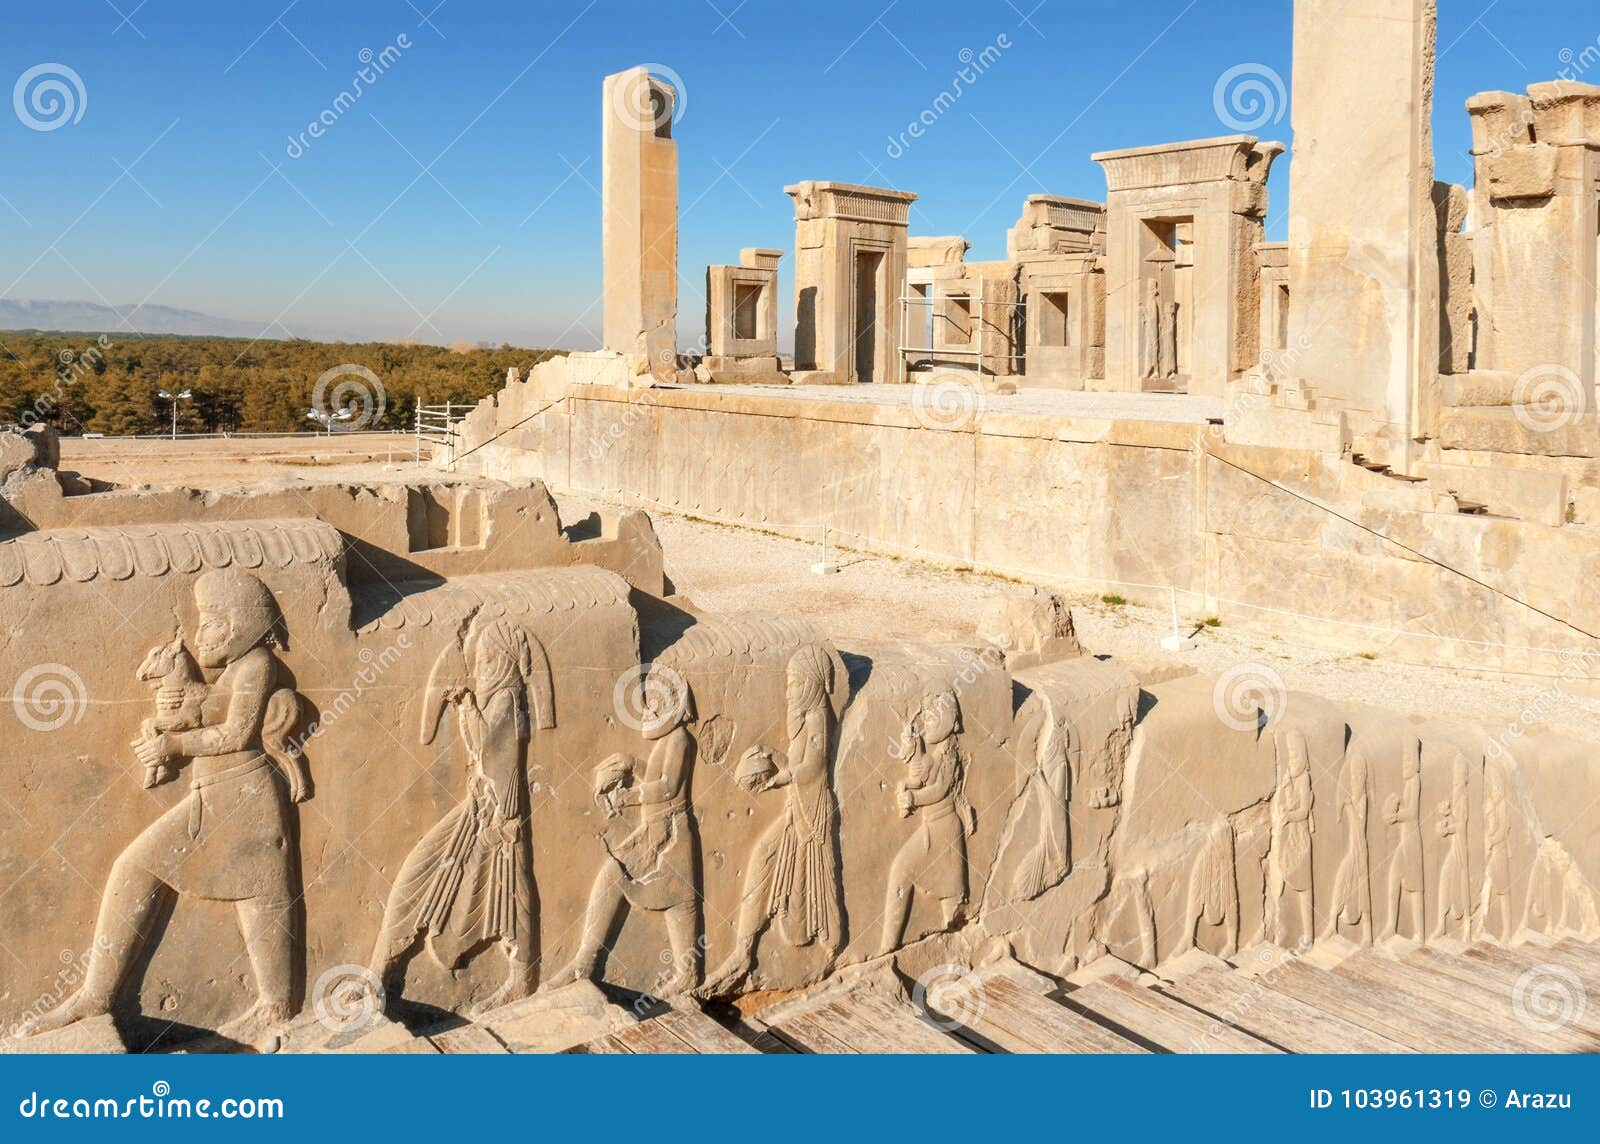 persepolis-ancient capital of persians, iran, persia